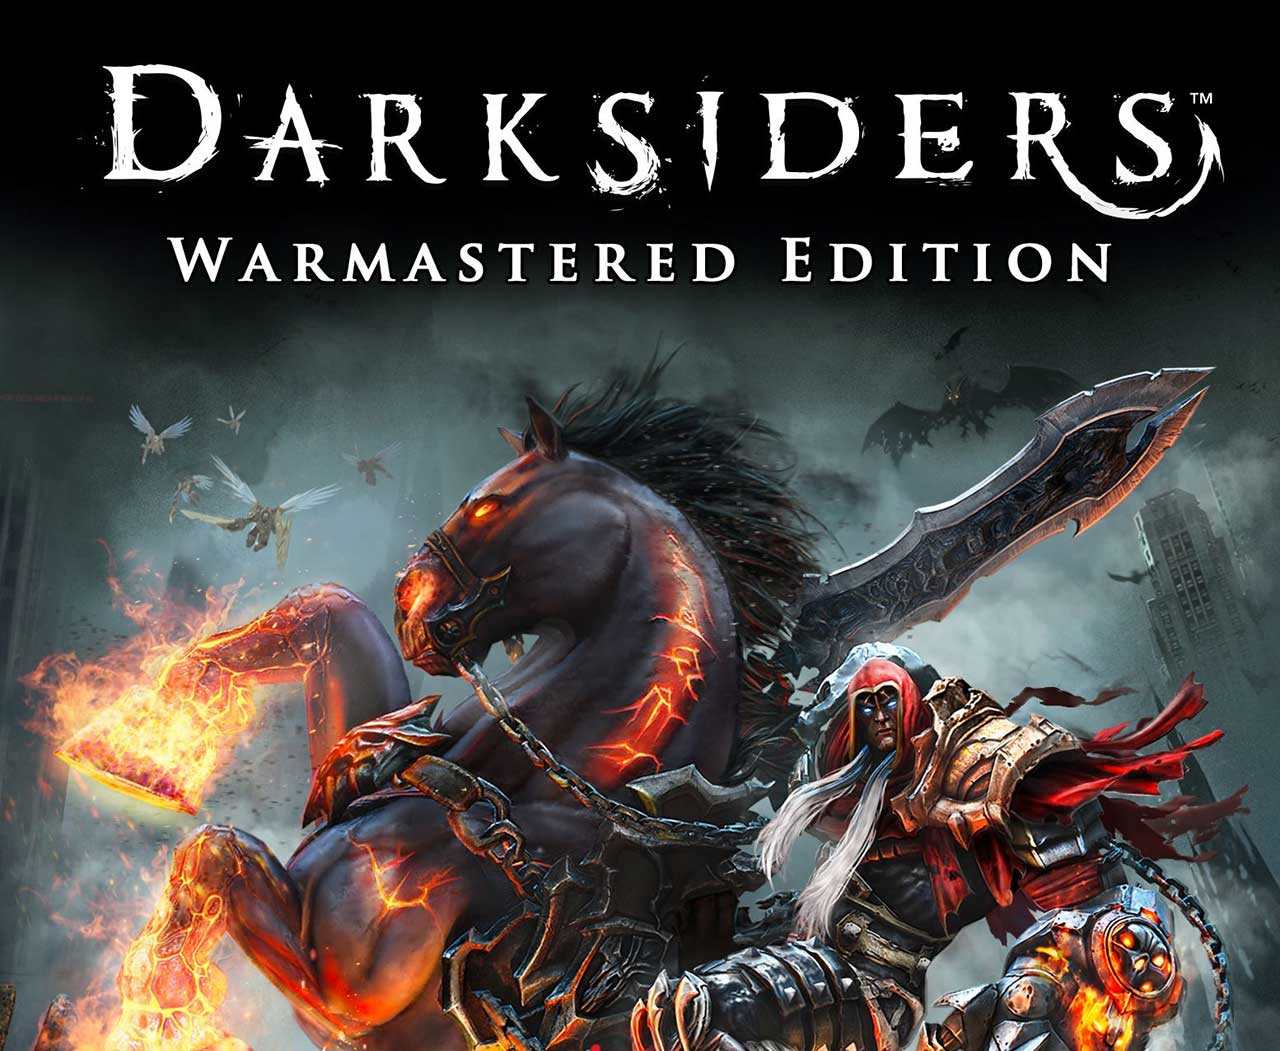 Darksiders Warmastered Edition head